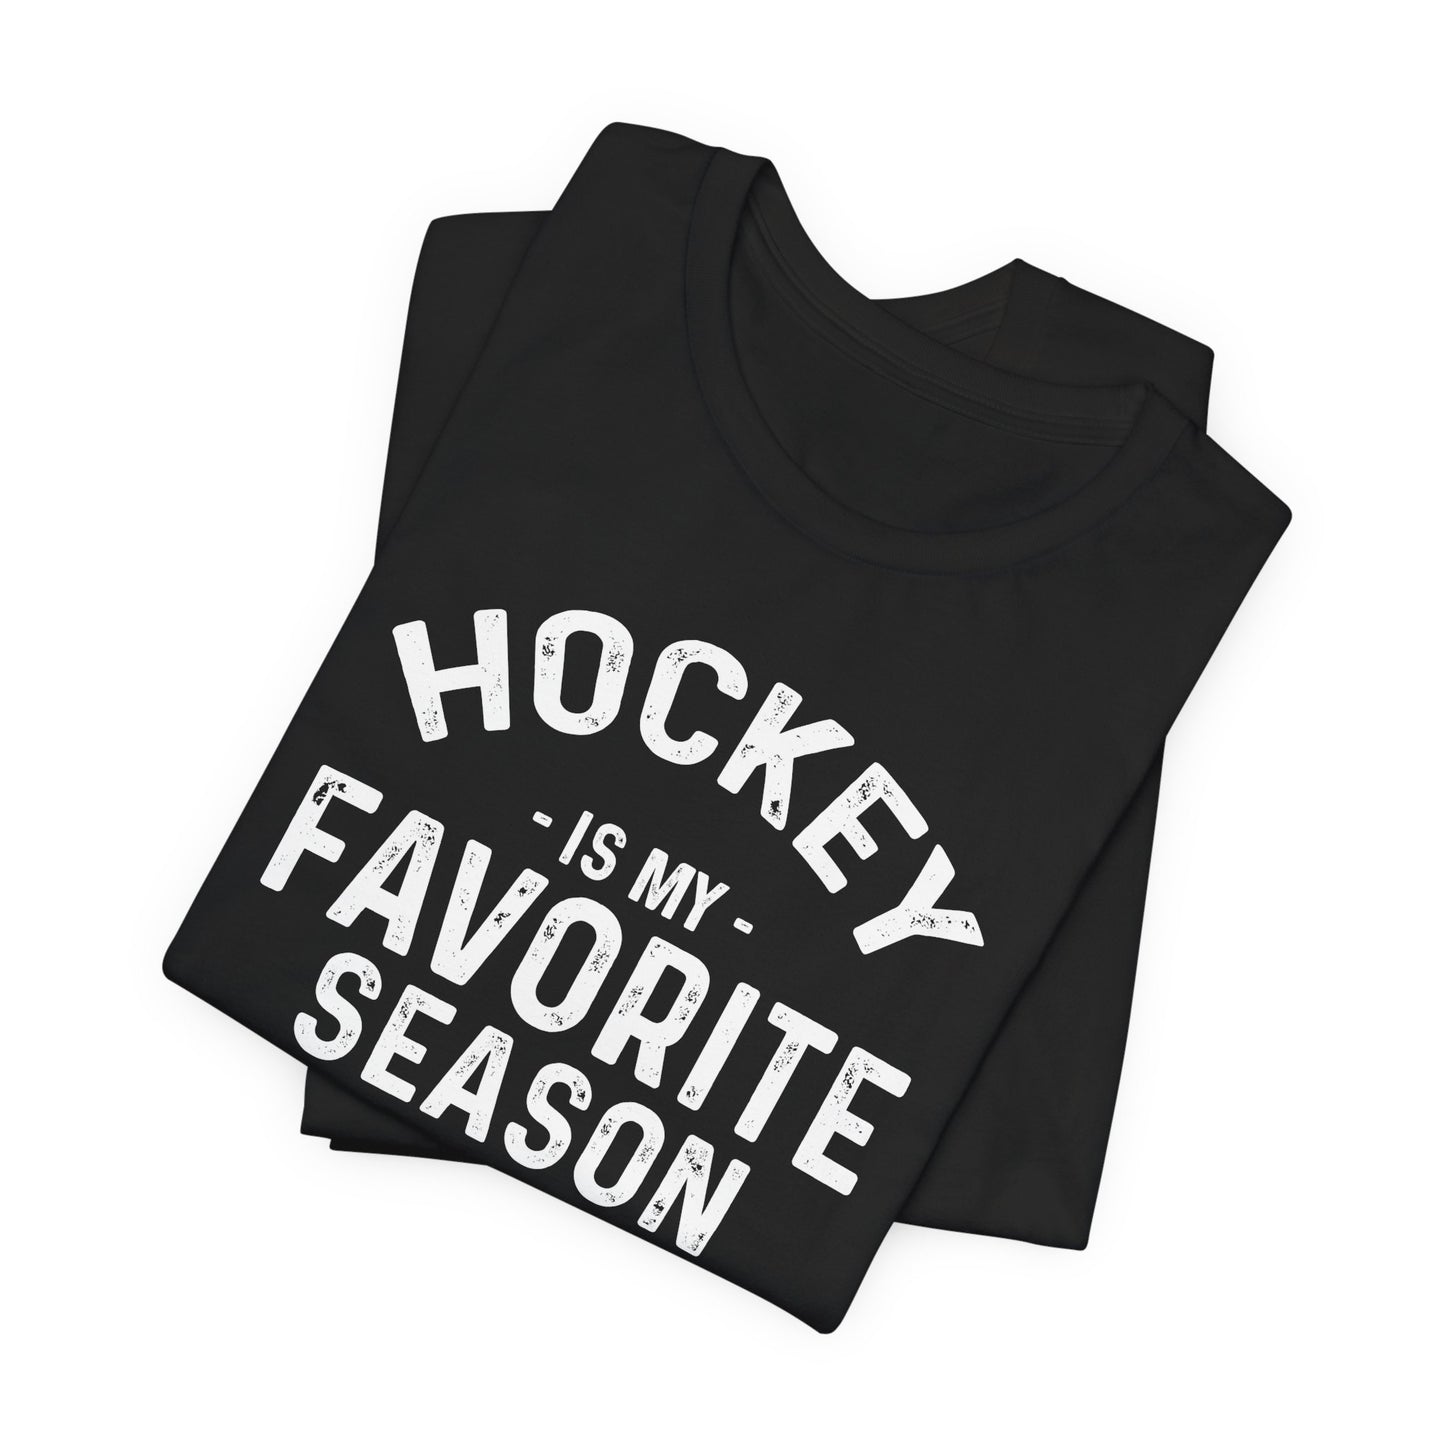 Hockey Season - Mens T-Shirt